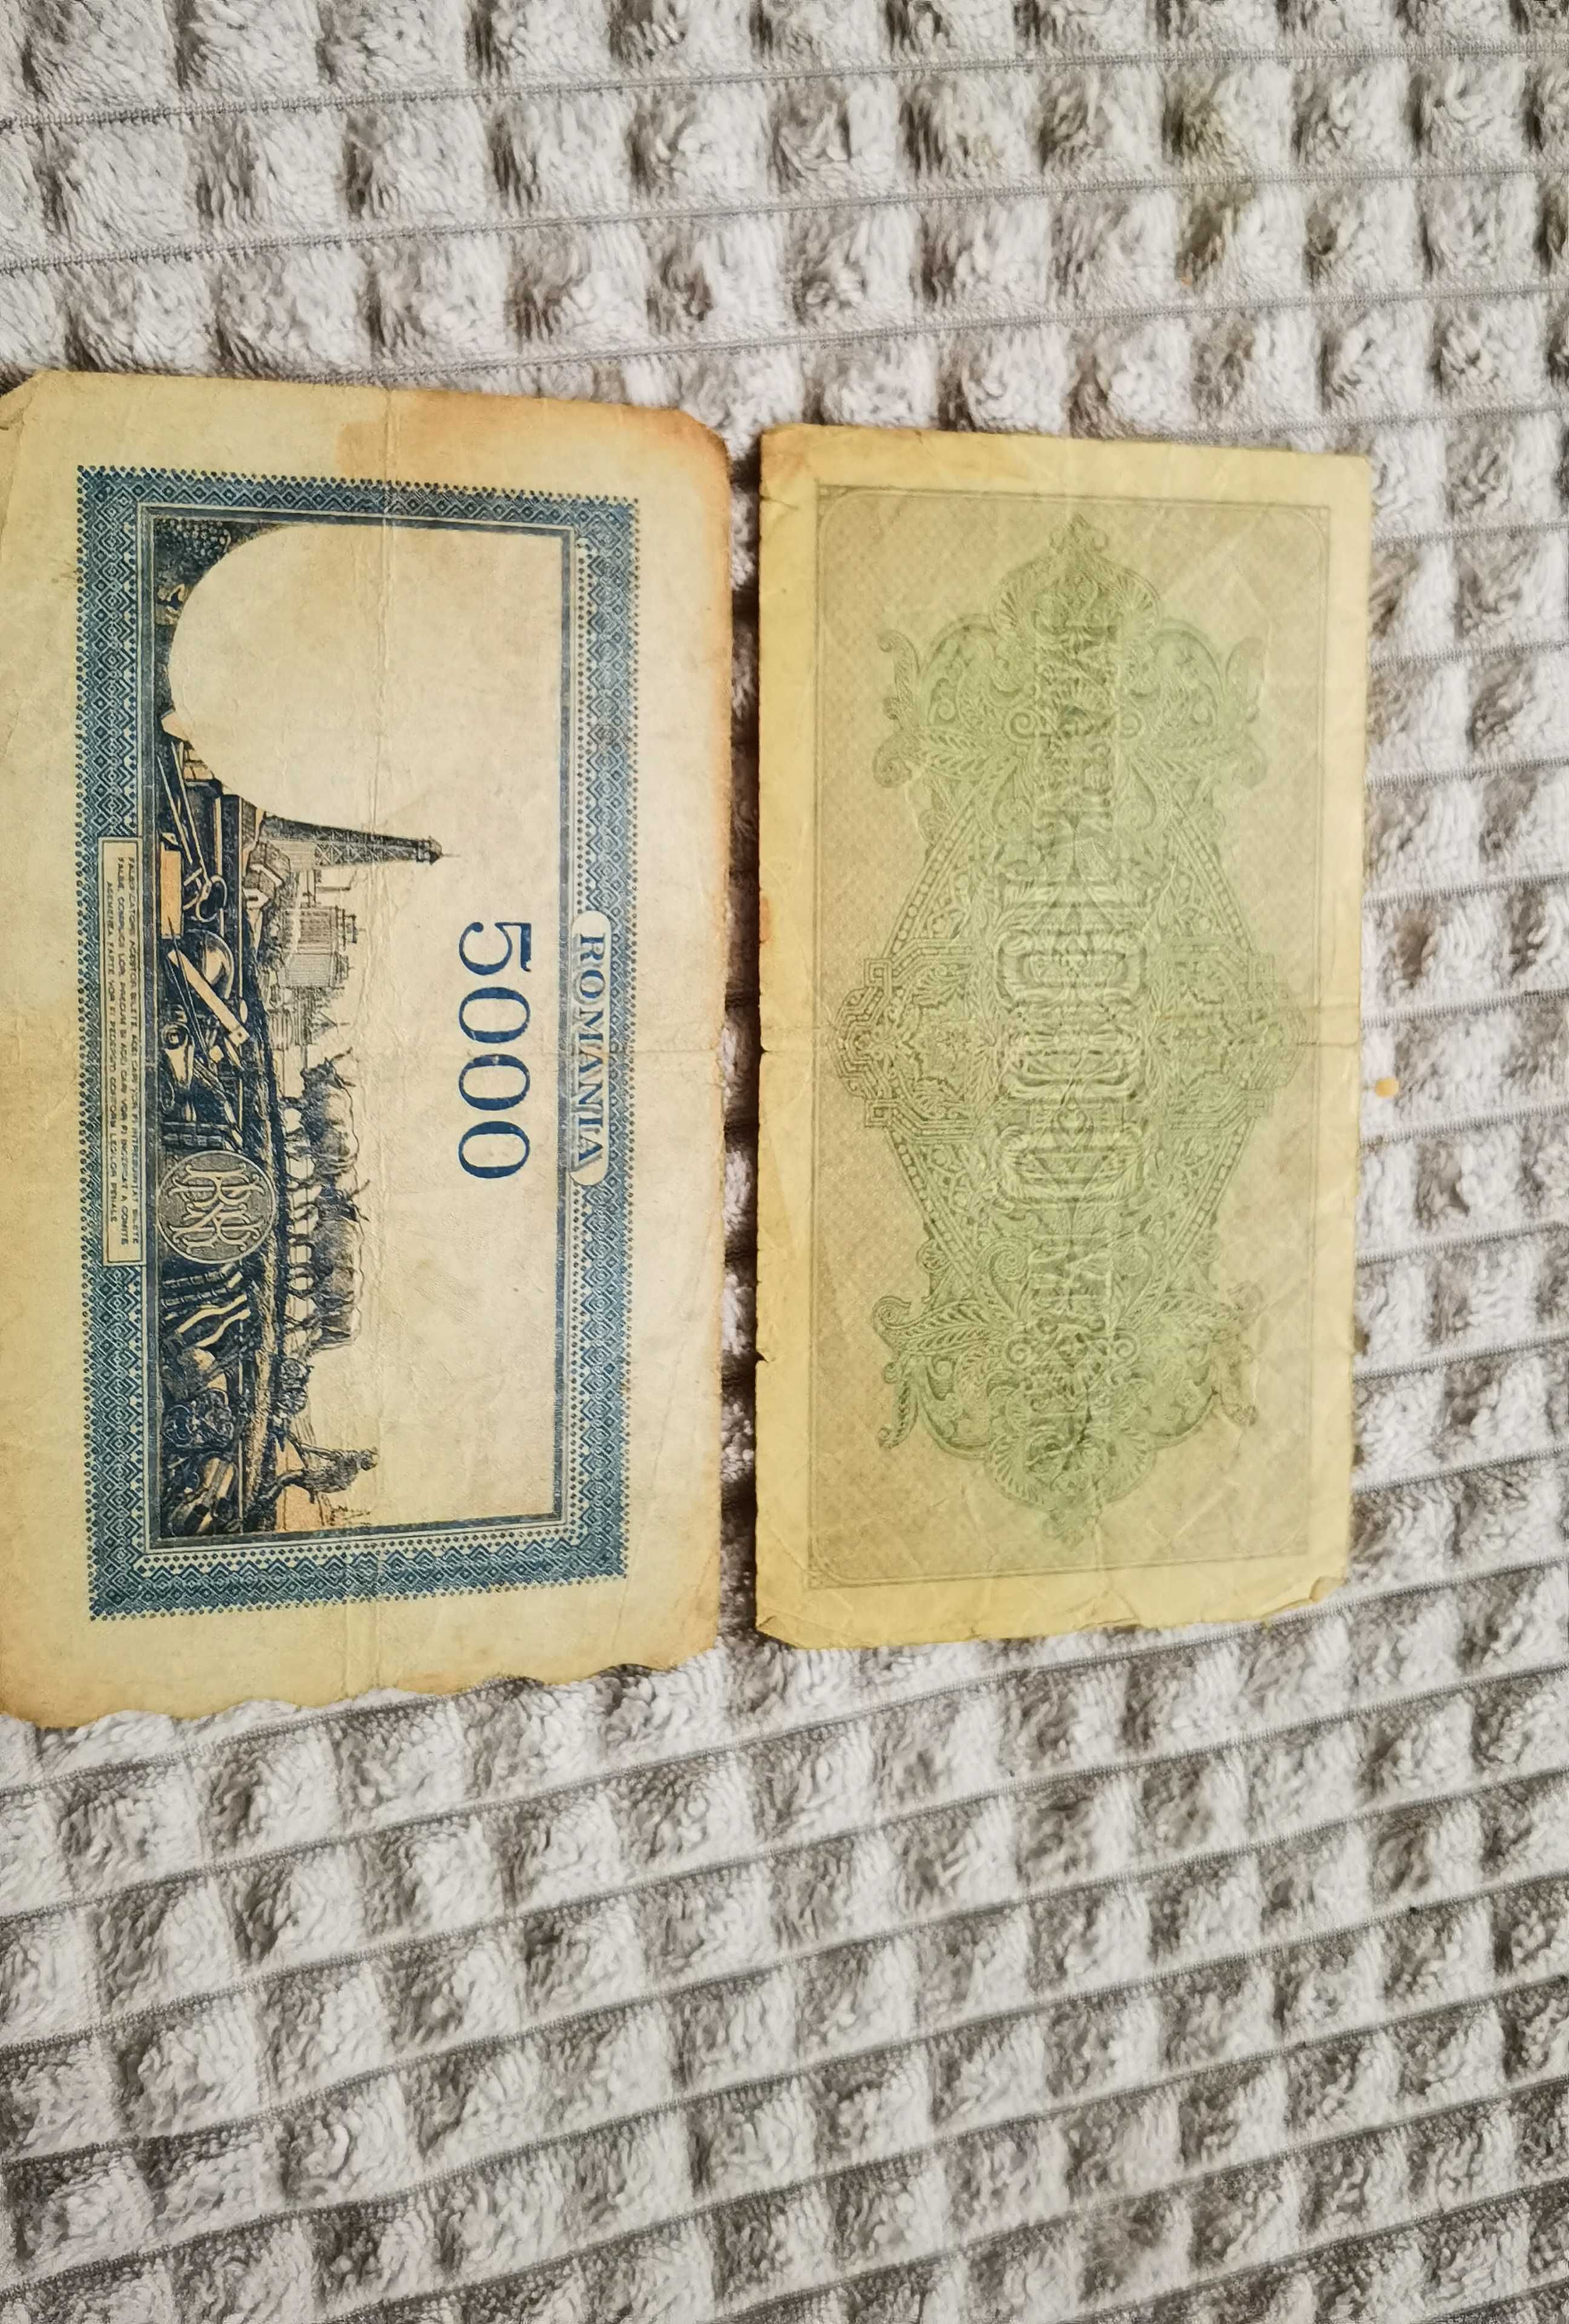 Bancnote vechi.doar ce se vede